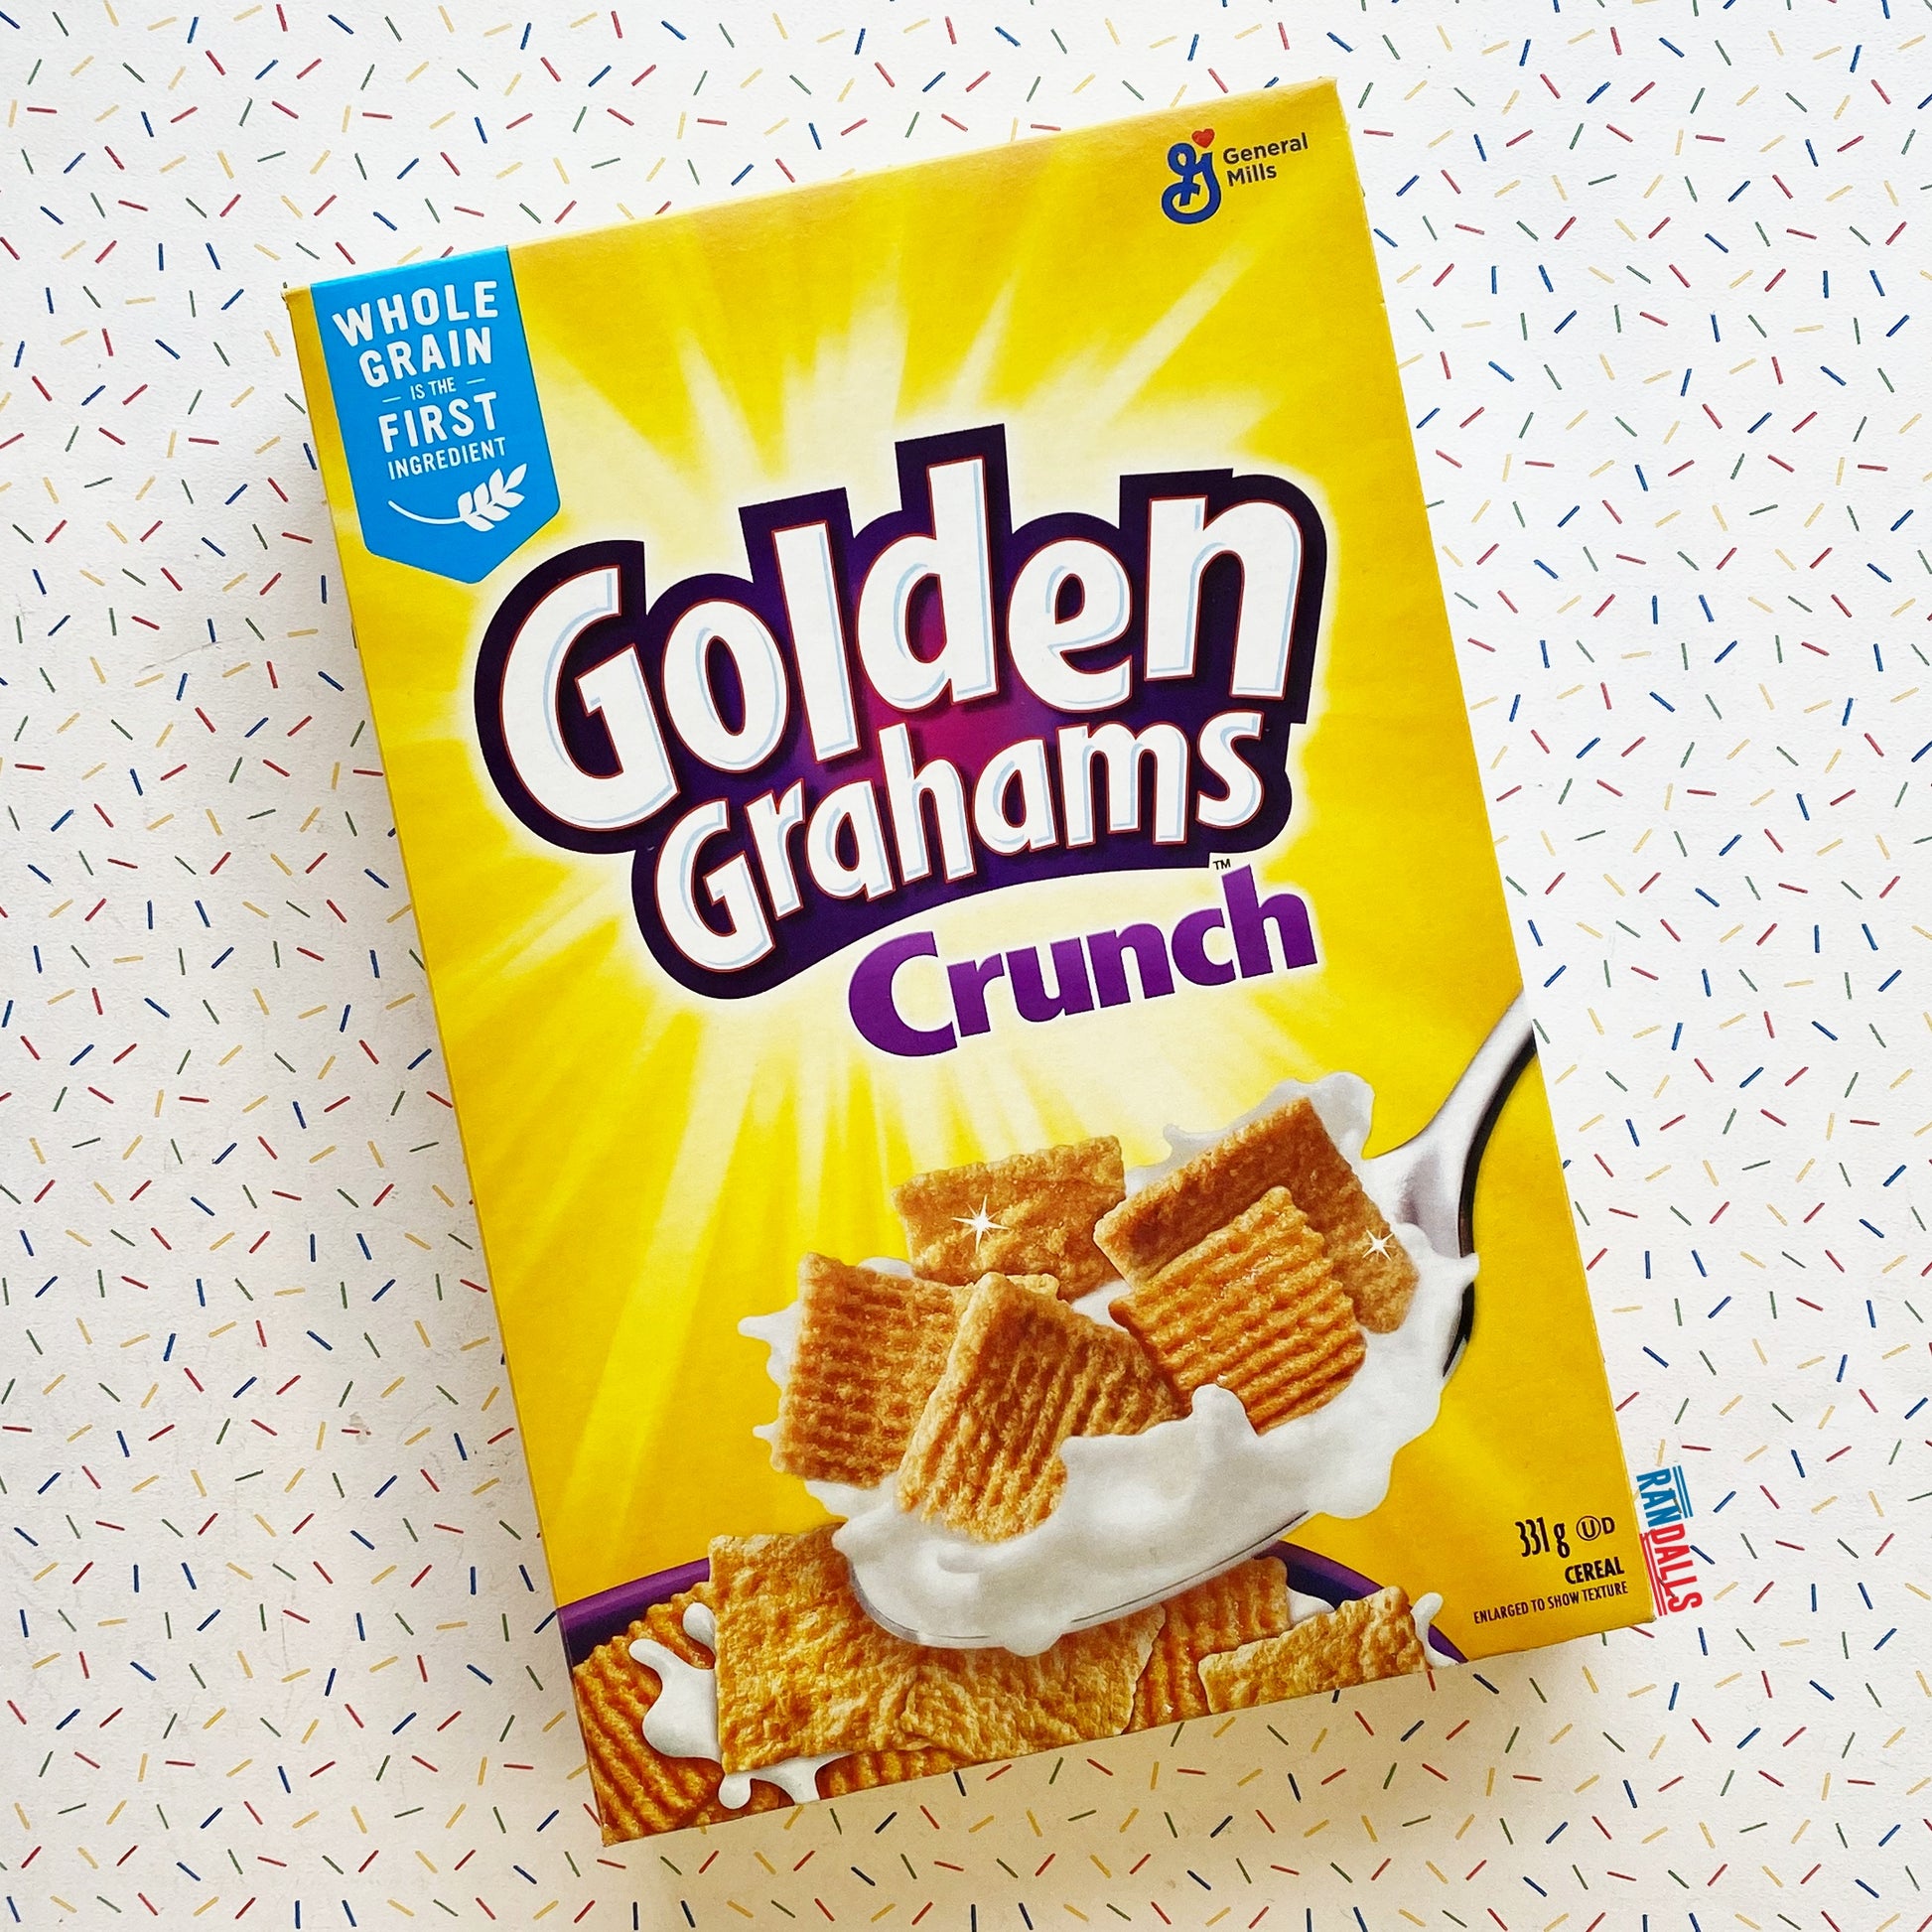 golden grahams crunch, cereal, wholegrain, breakfast, milk, usa, randalls